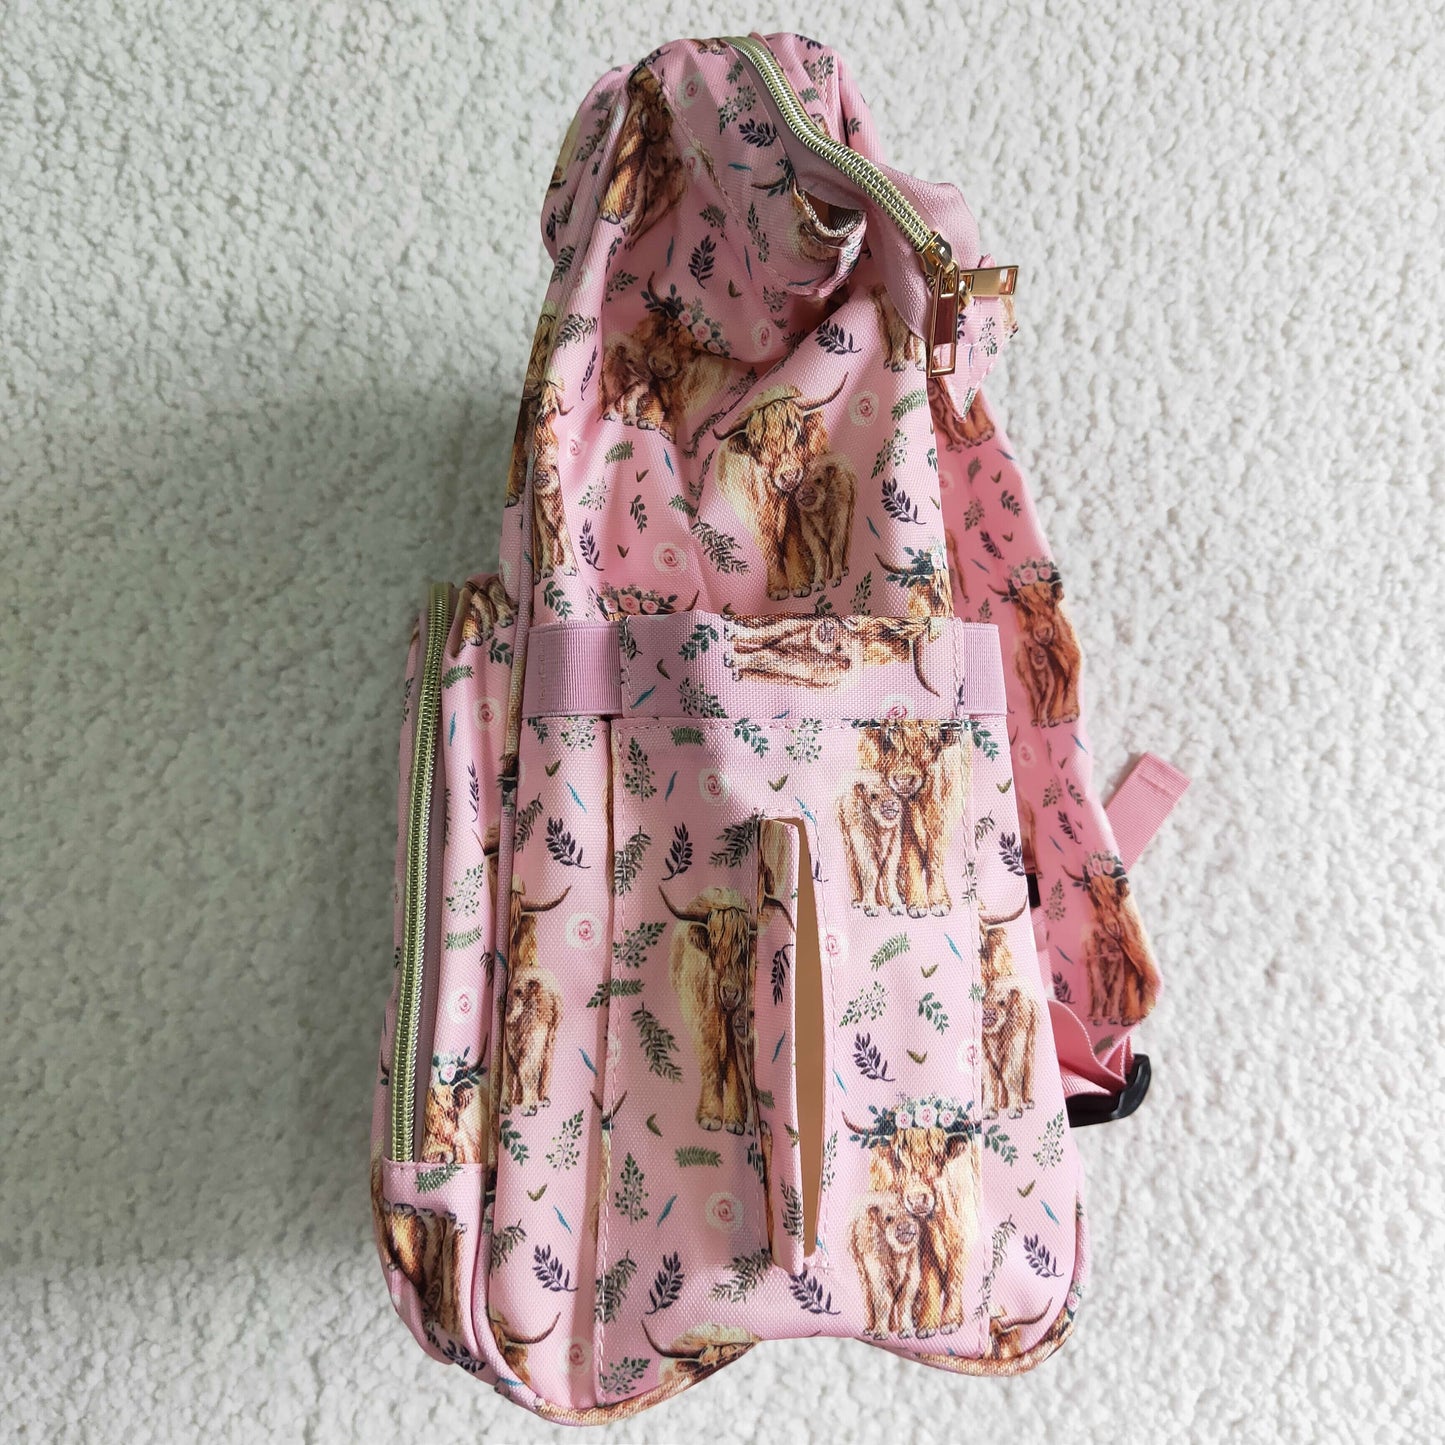 BA0016 Alpine Cow Schoolbag Backpack Diaper Bag